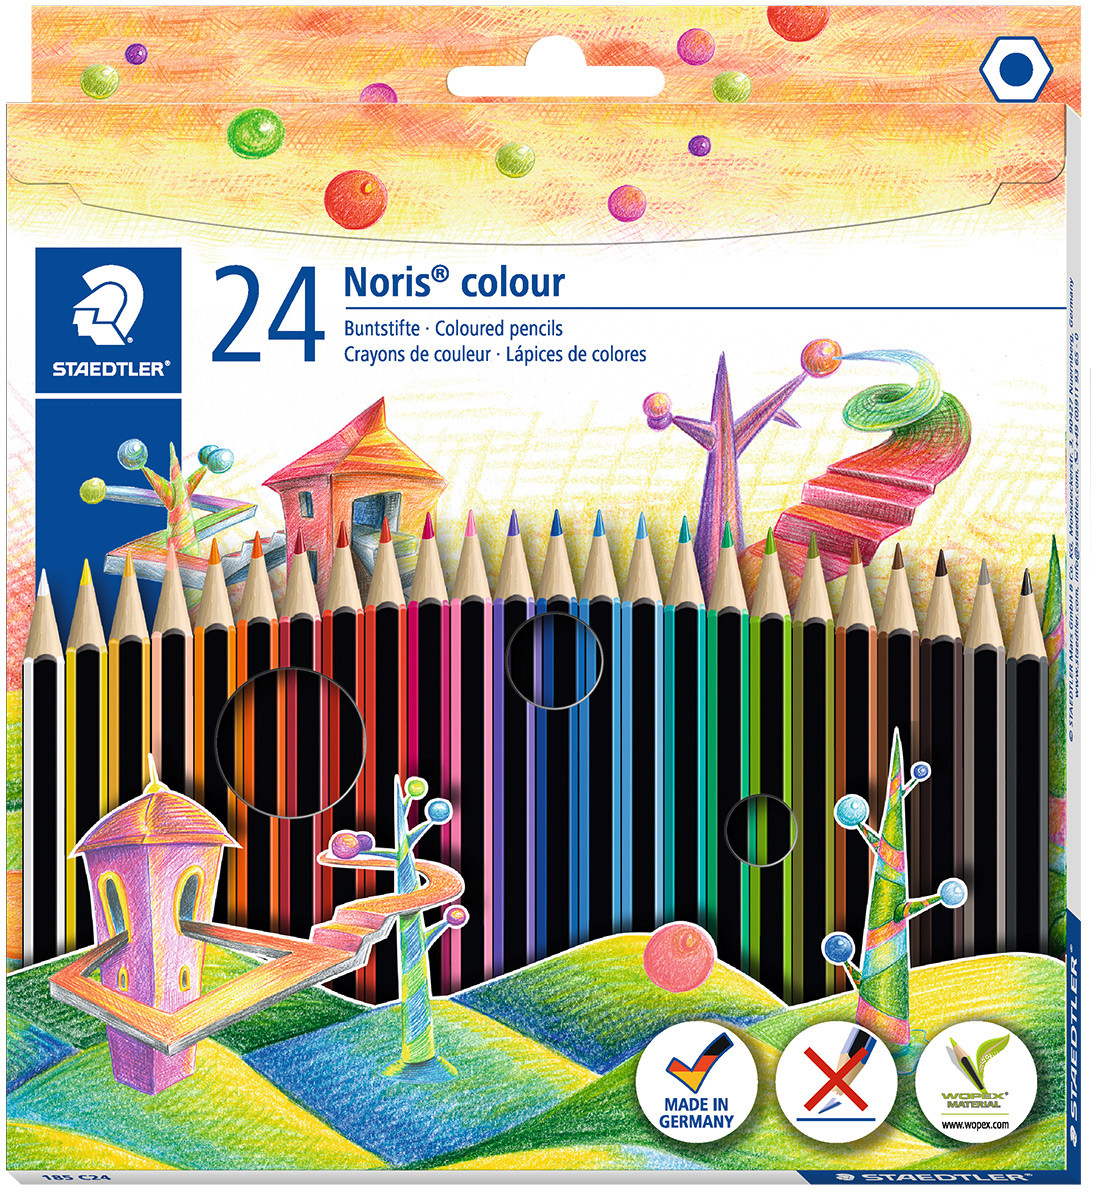 Staedtler Noris Club 144 Nc24 Colouring Pencils Assorted Colours 24 Pk Free... 